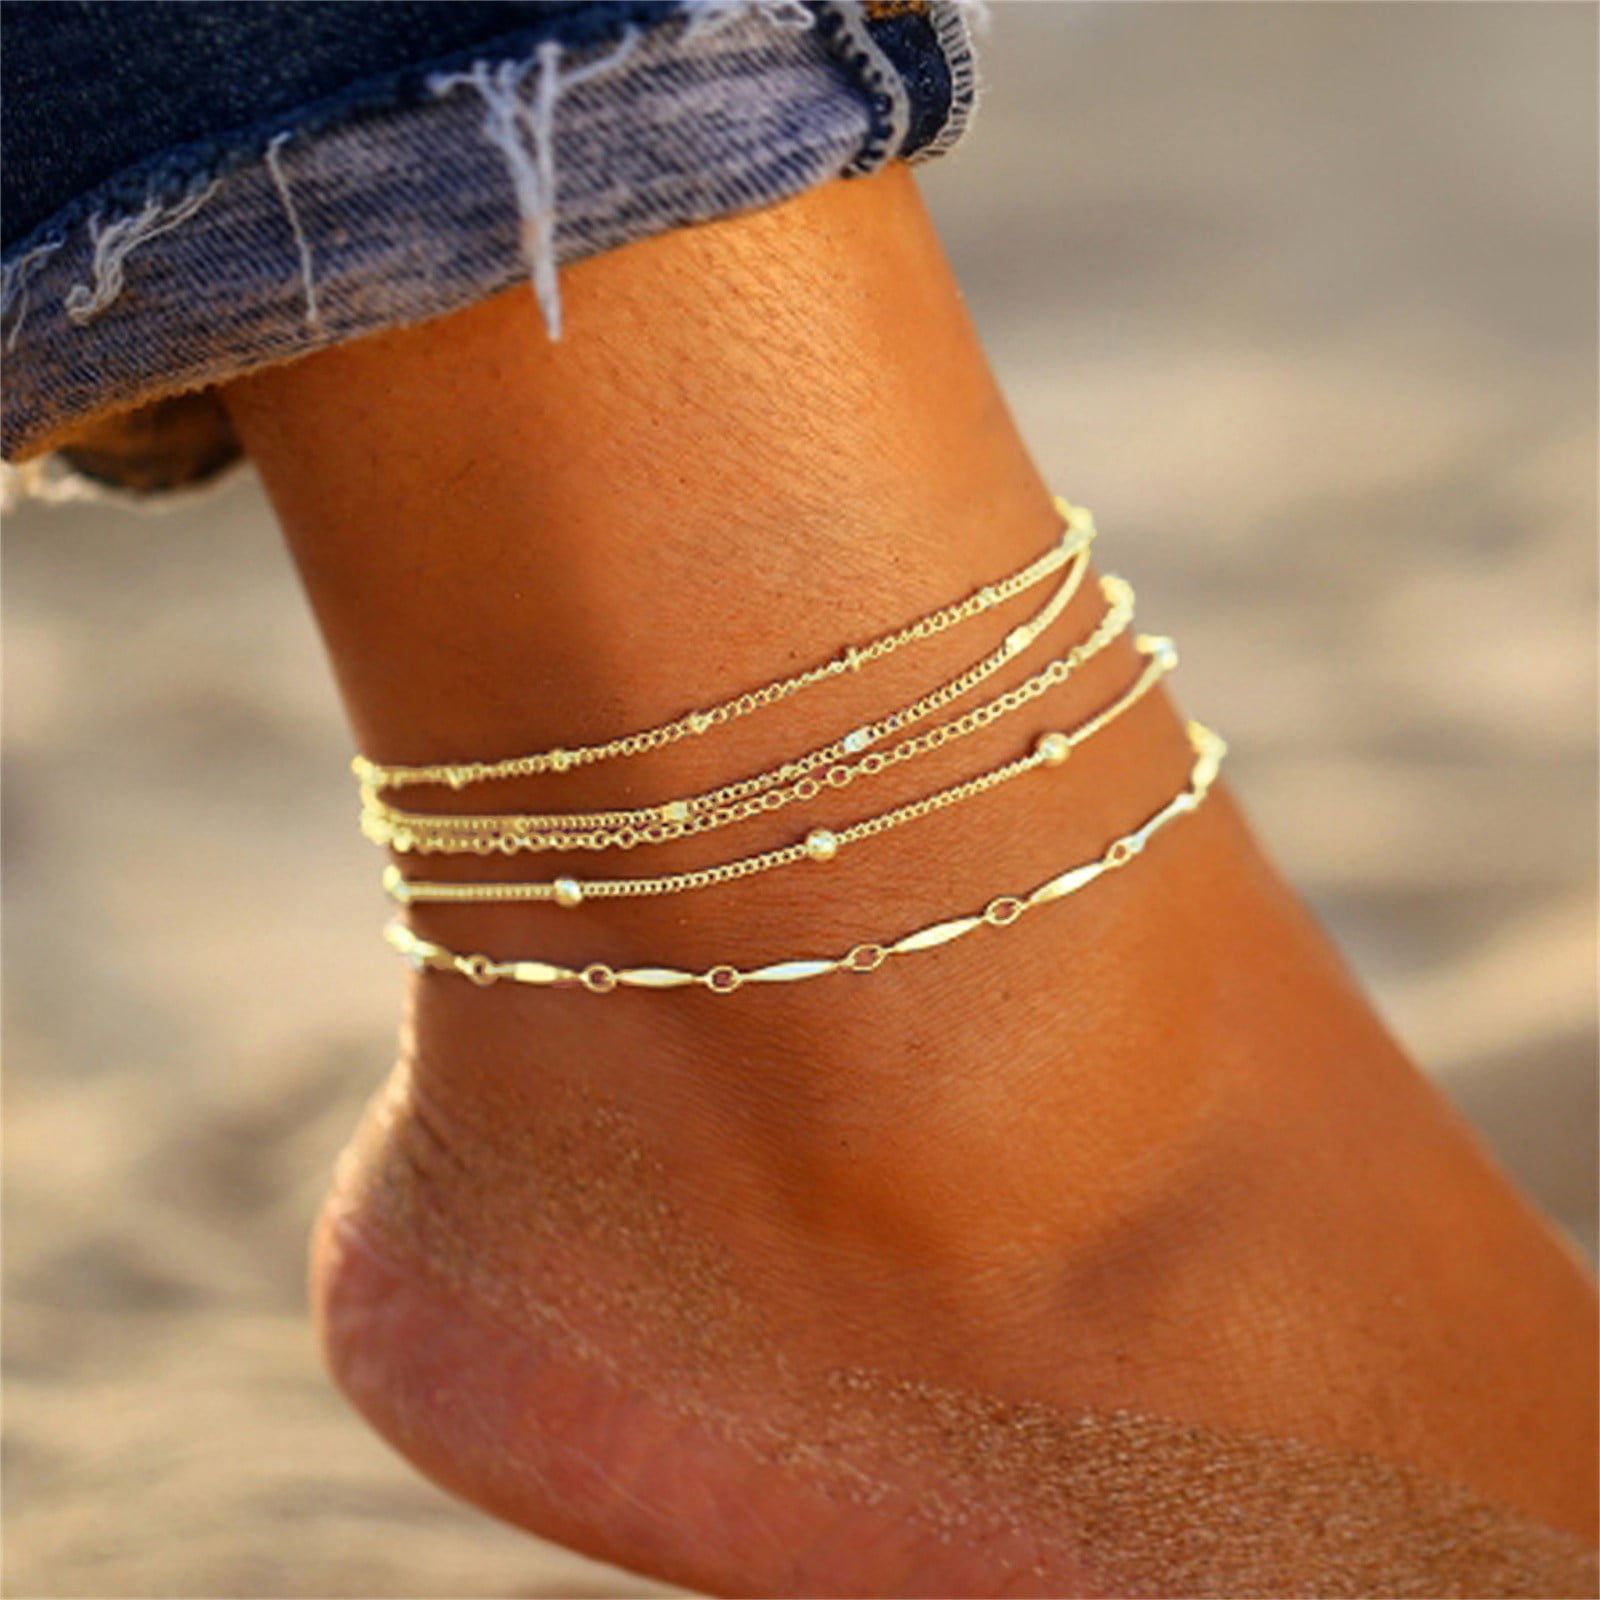 Buy Stretch Anklet // Beach Anklet // Minimal Beaded Anklet With Tassel //  Anklet for Girls // Ankle Bracelet for Girls Online in India - Etsy